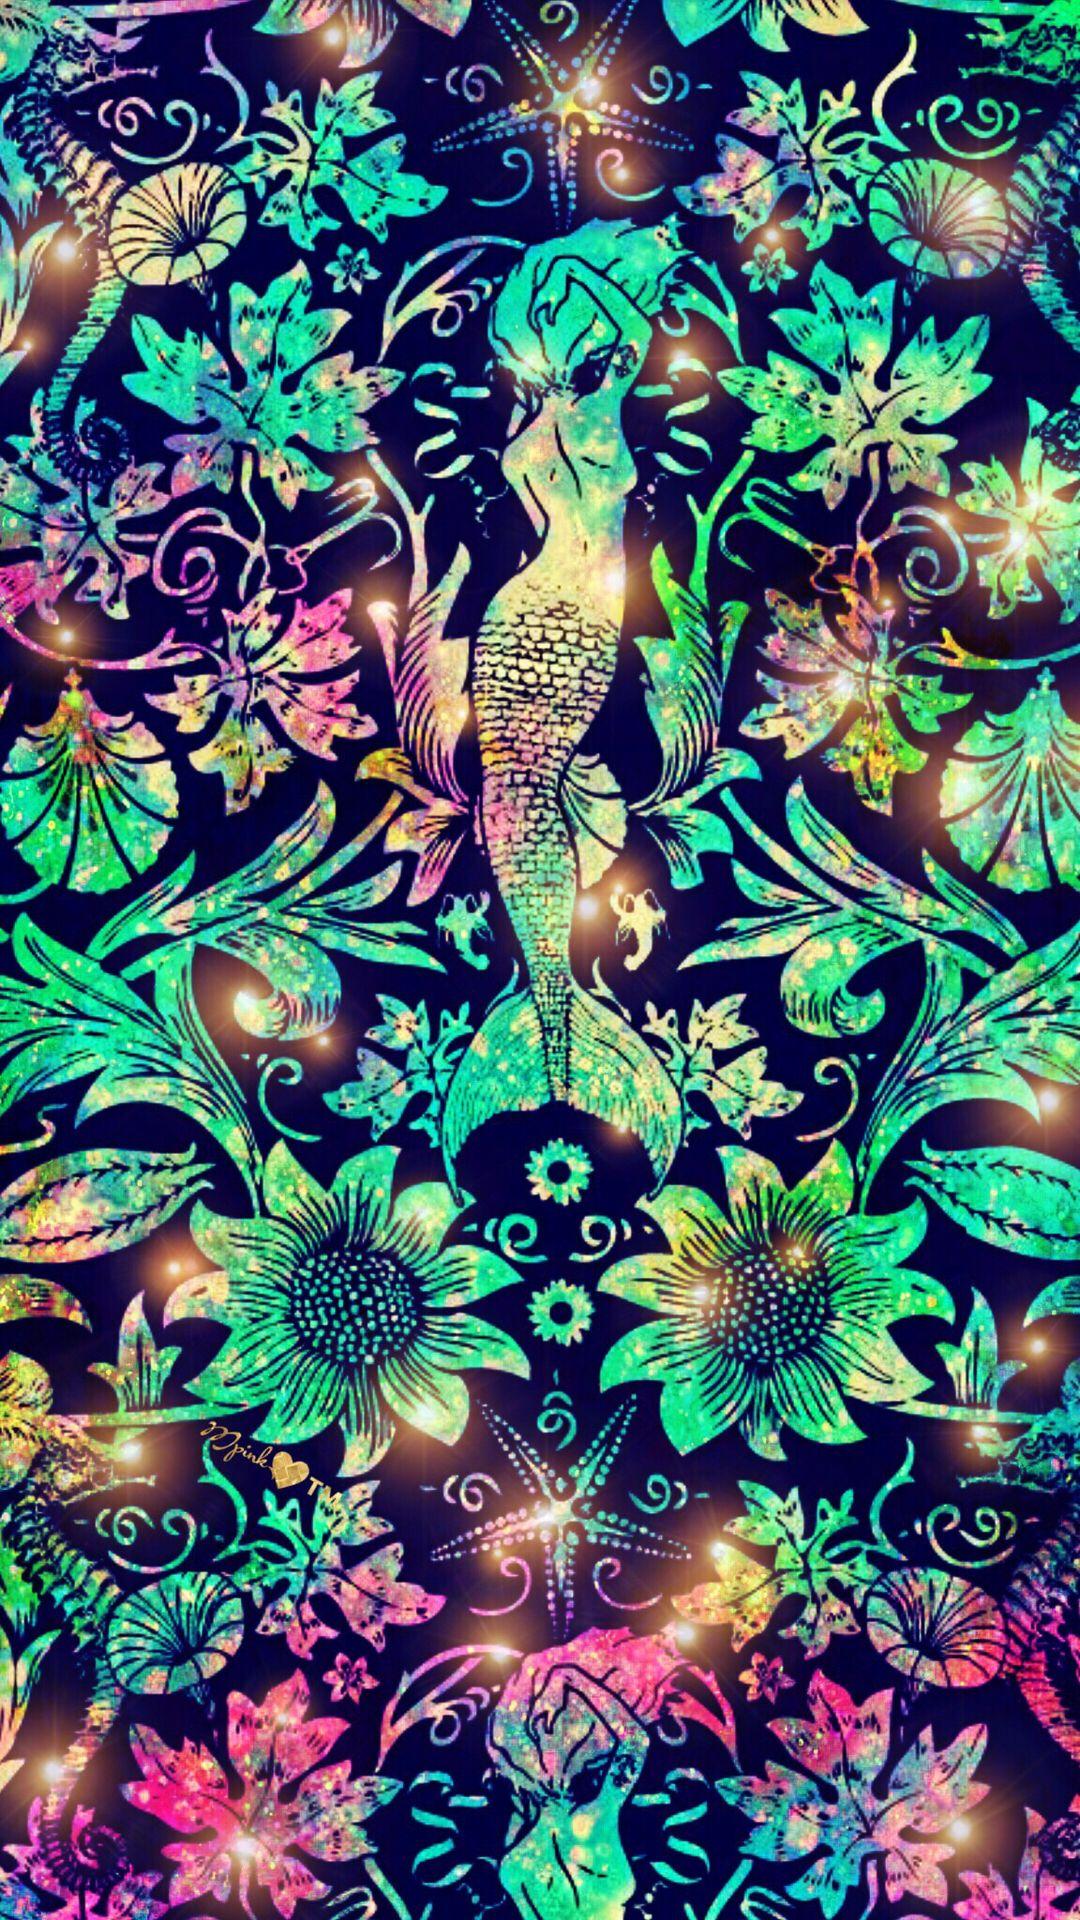 Vintage Mermaid Galaxy Wallpaper #androidwallpaper #iphonewallpaper